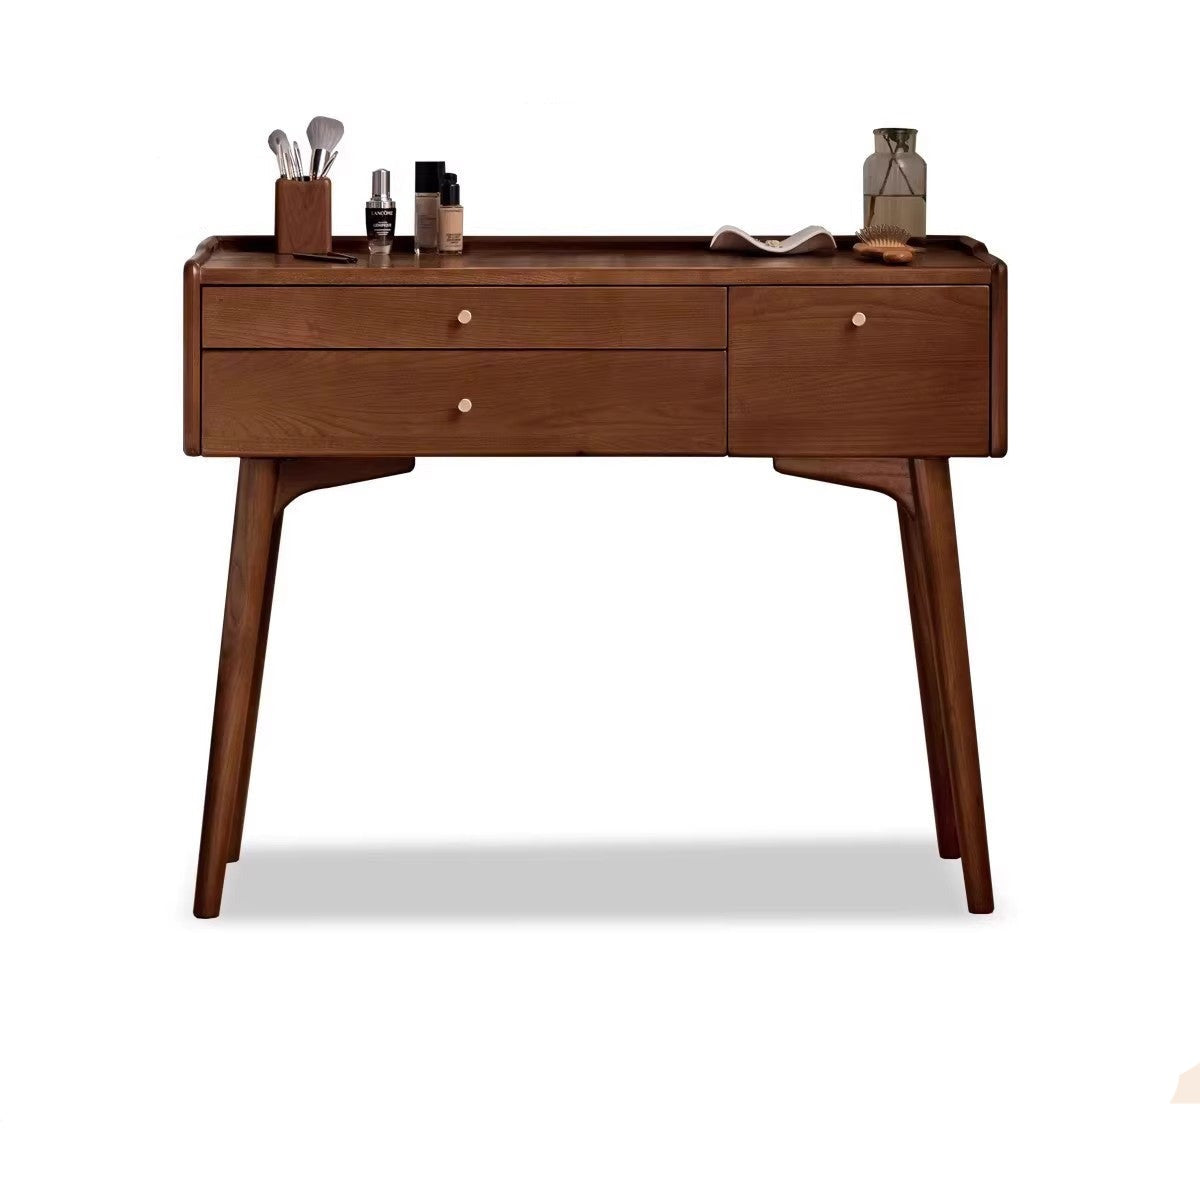 Black Walnut , Ash solid wood Dressing table: